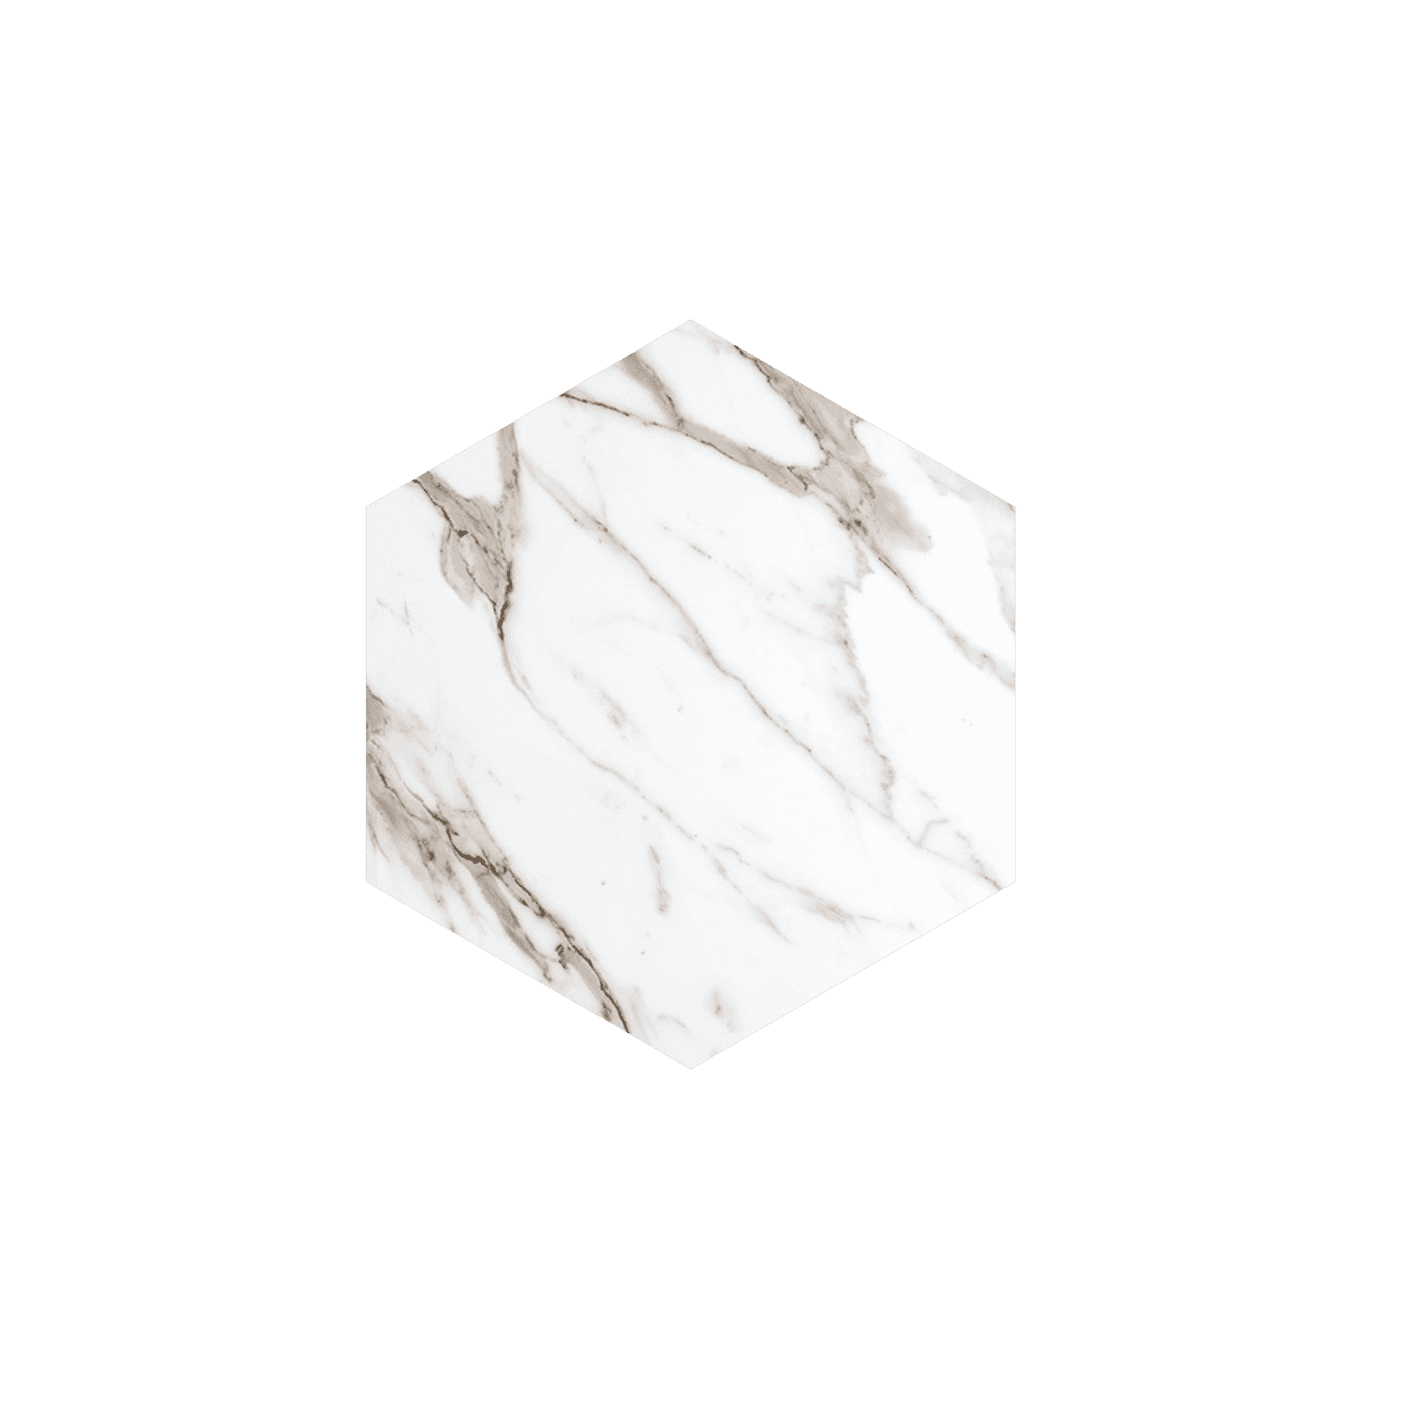 Sienos dekoracija Hexagon White Marble, 30 x 30